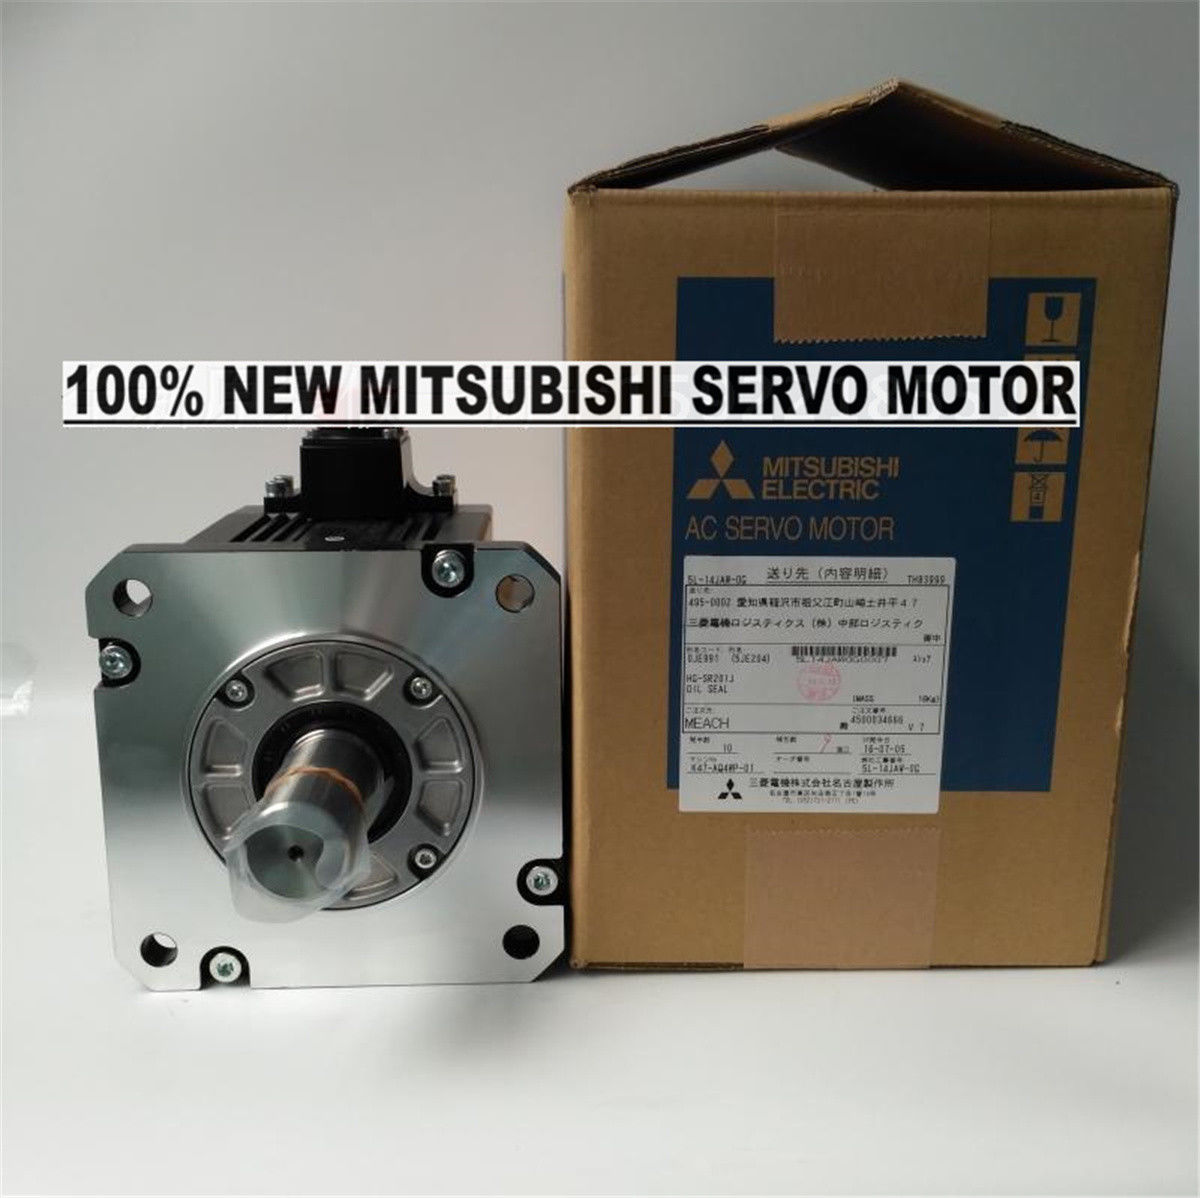 NEW Mitsubishi Servo Motor HG-SR201J in box HGSR201J